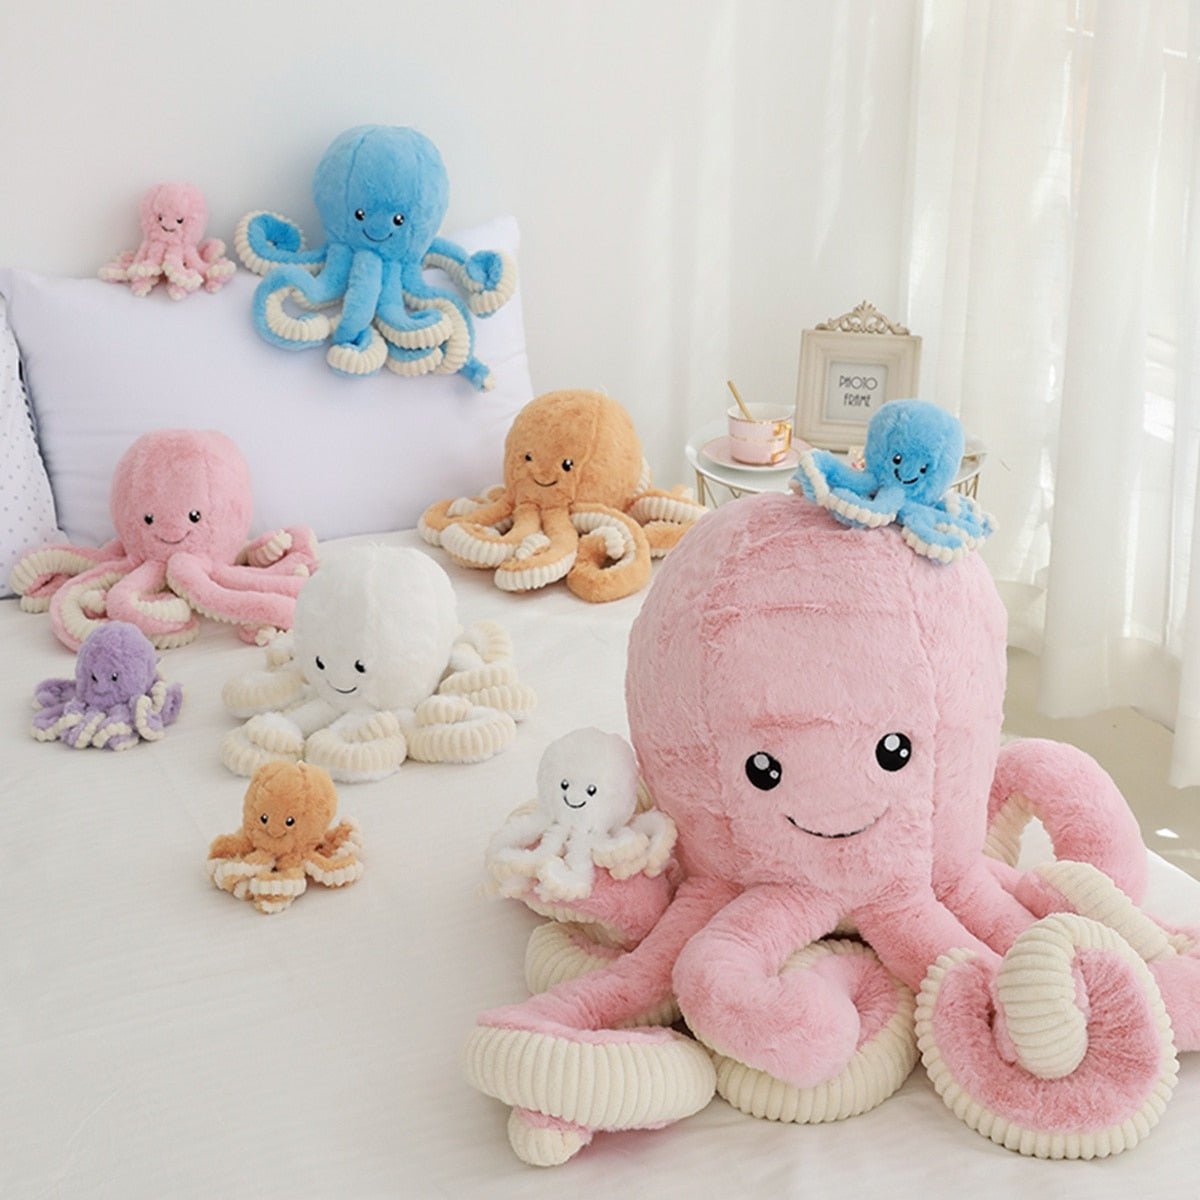 Plush Fuzzy Cuddling Octopus, Five Colors, 0.59-2.6' | 18-80cm Plushie Produce